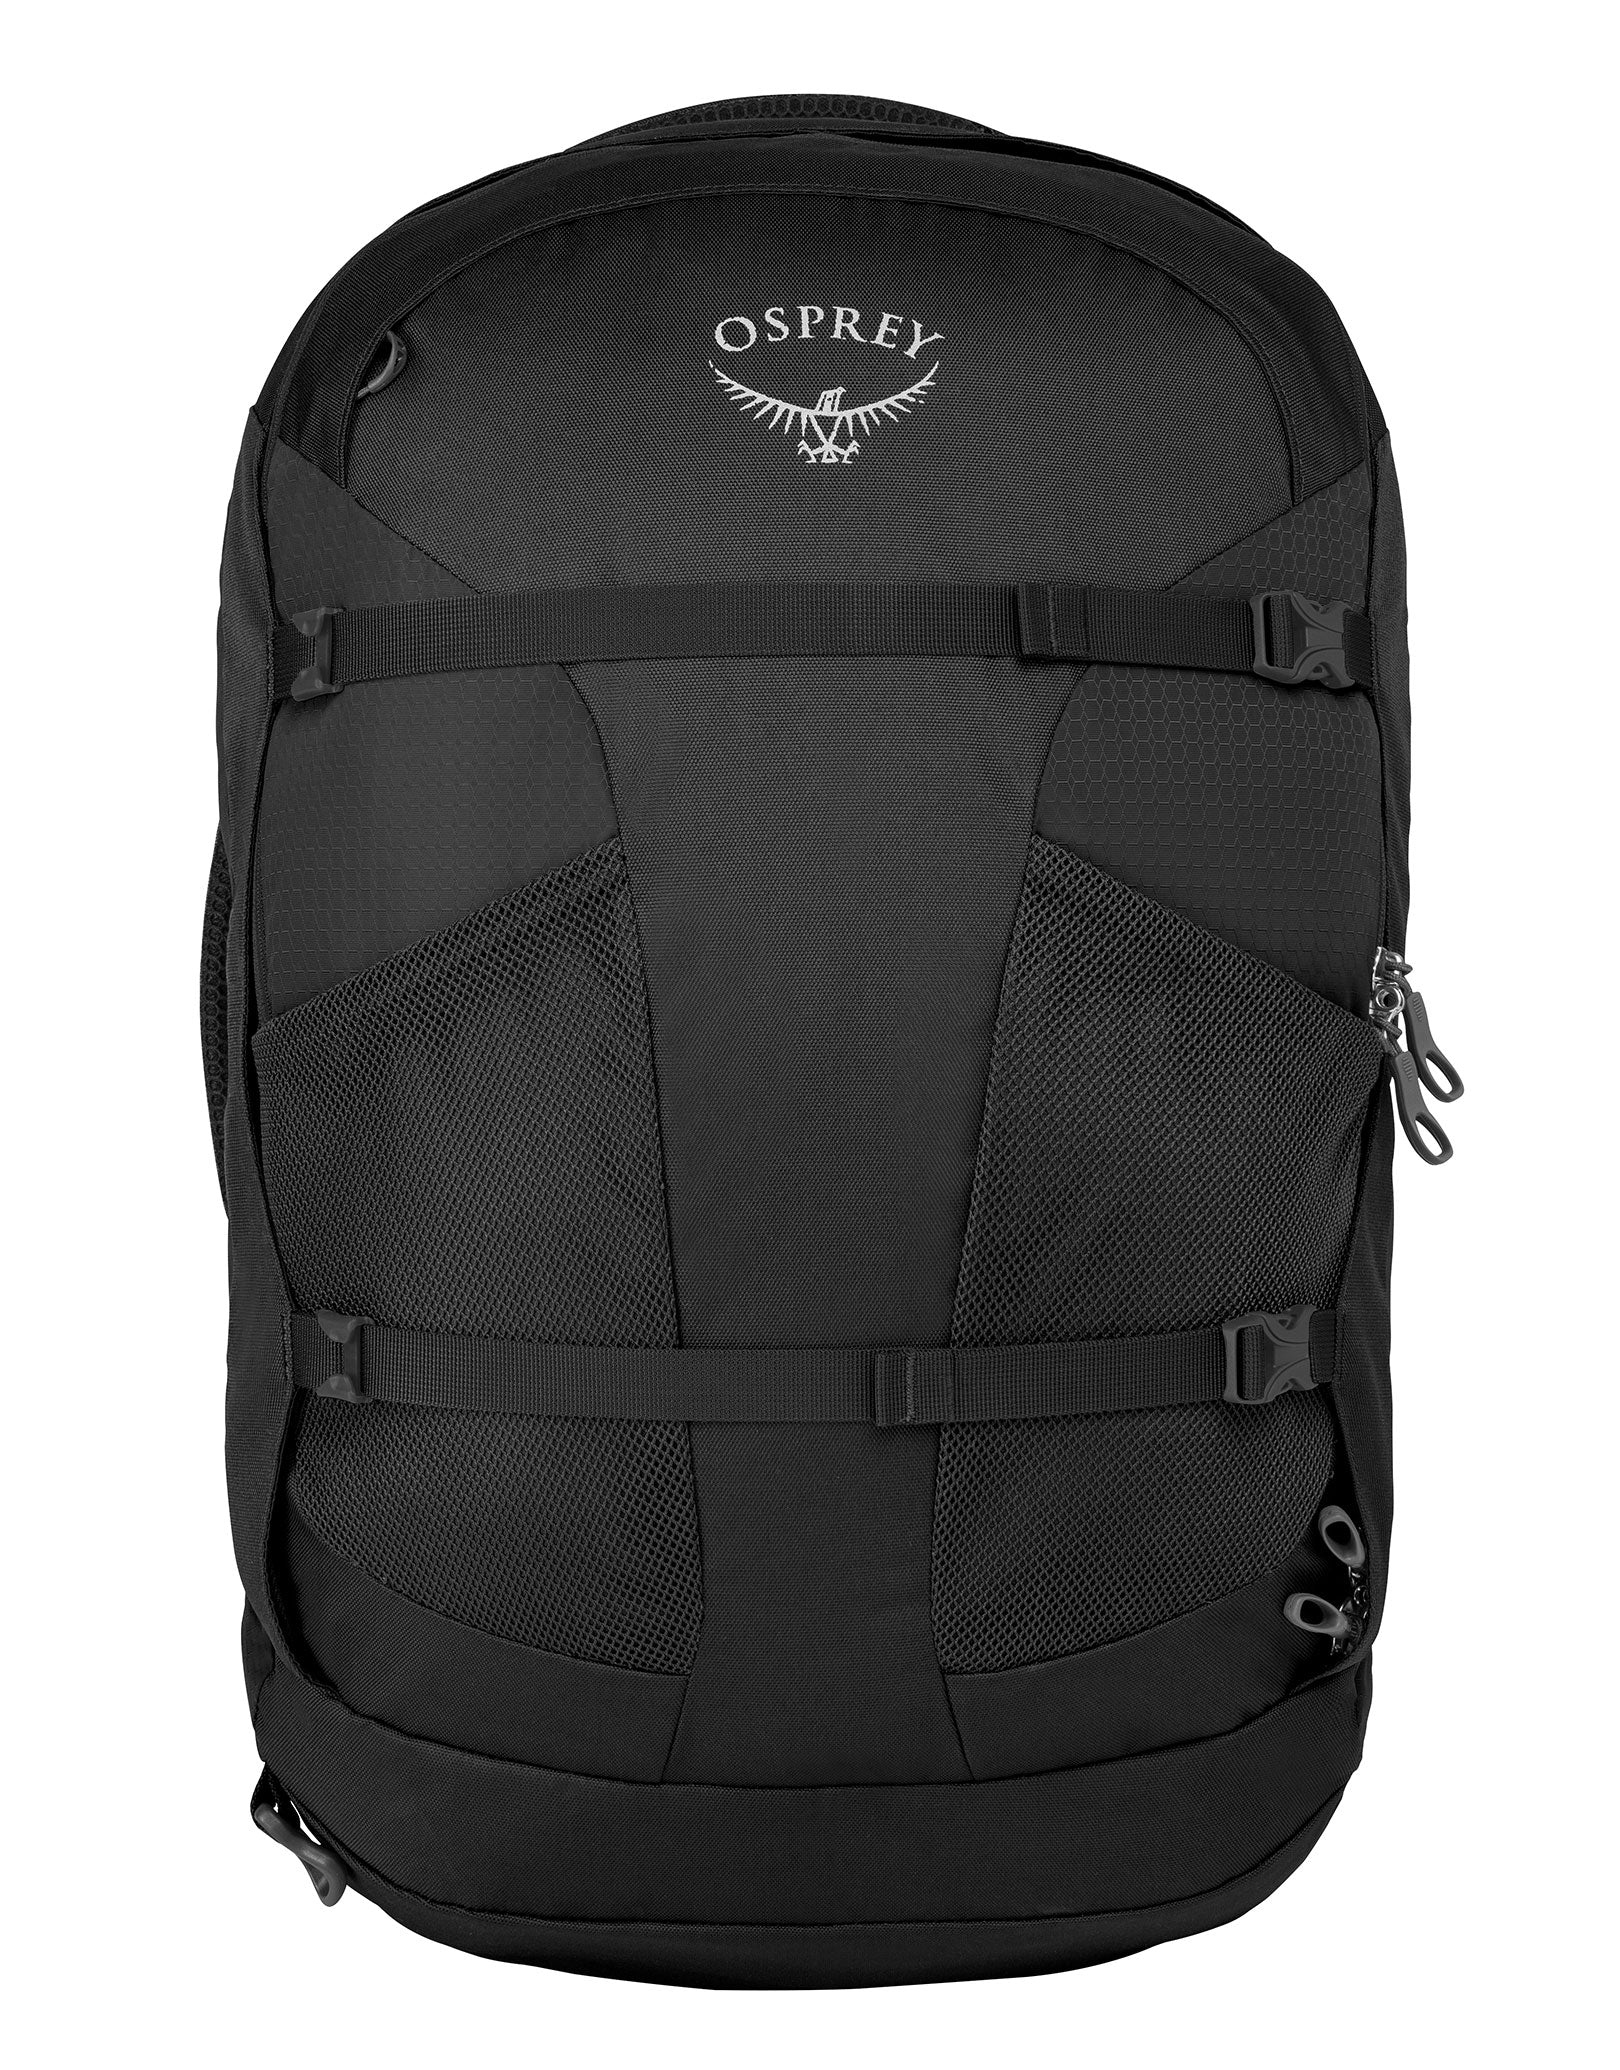 Osprey Farpoint 40 Travel Bag - Volcanic Grey | Simply Hike UK